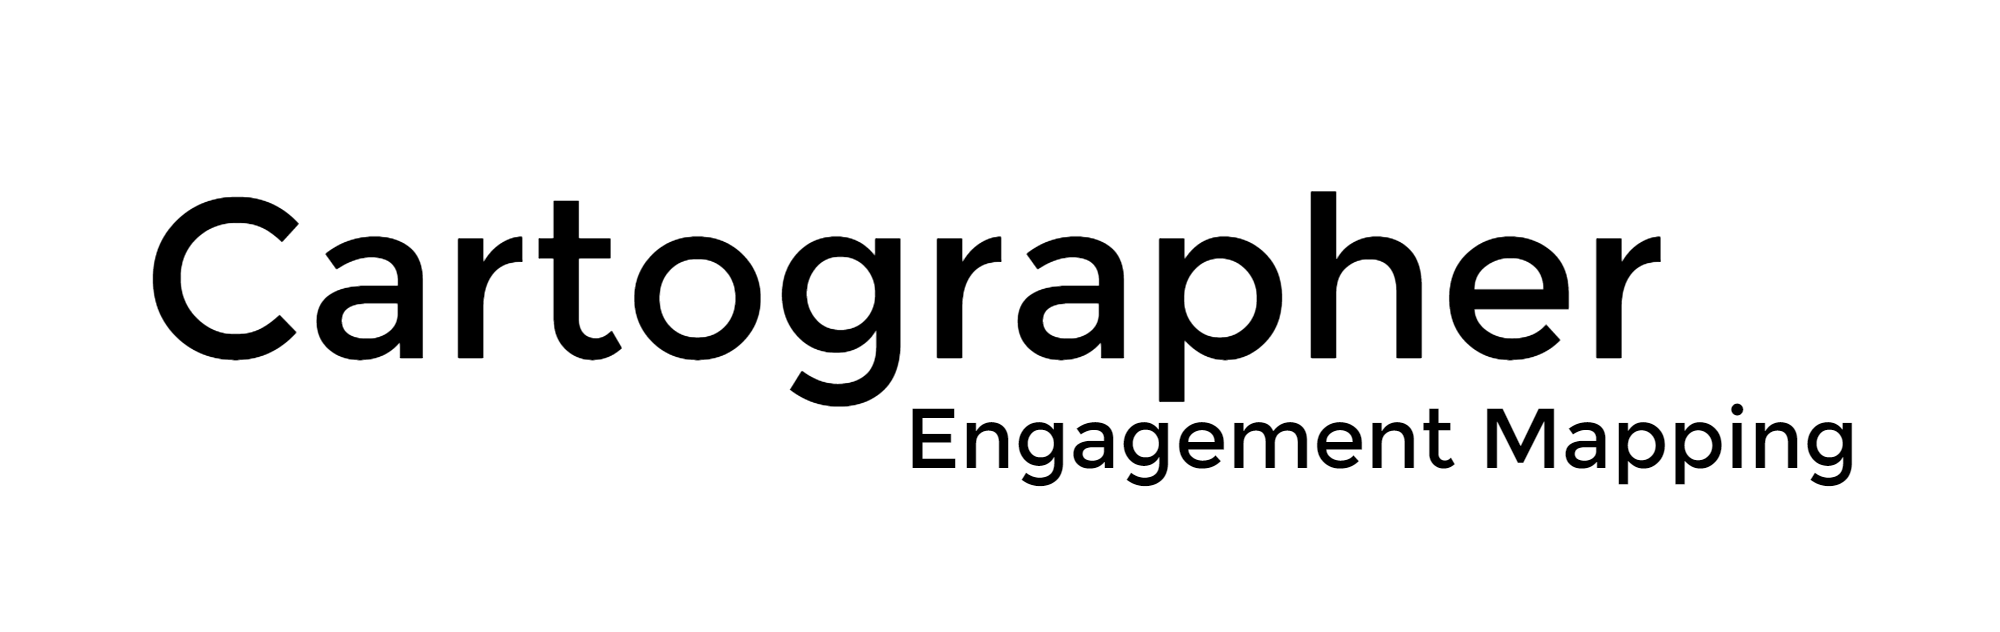 Cartographer Logo - Cartographer Engagement Mapping Sales & Marketing Automation